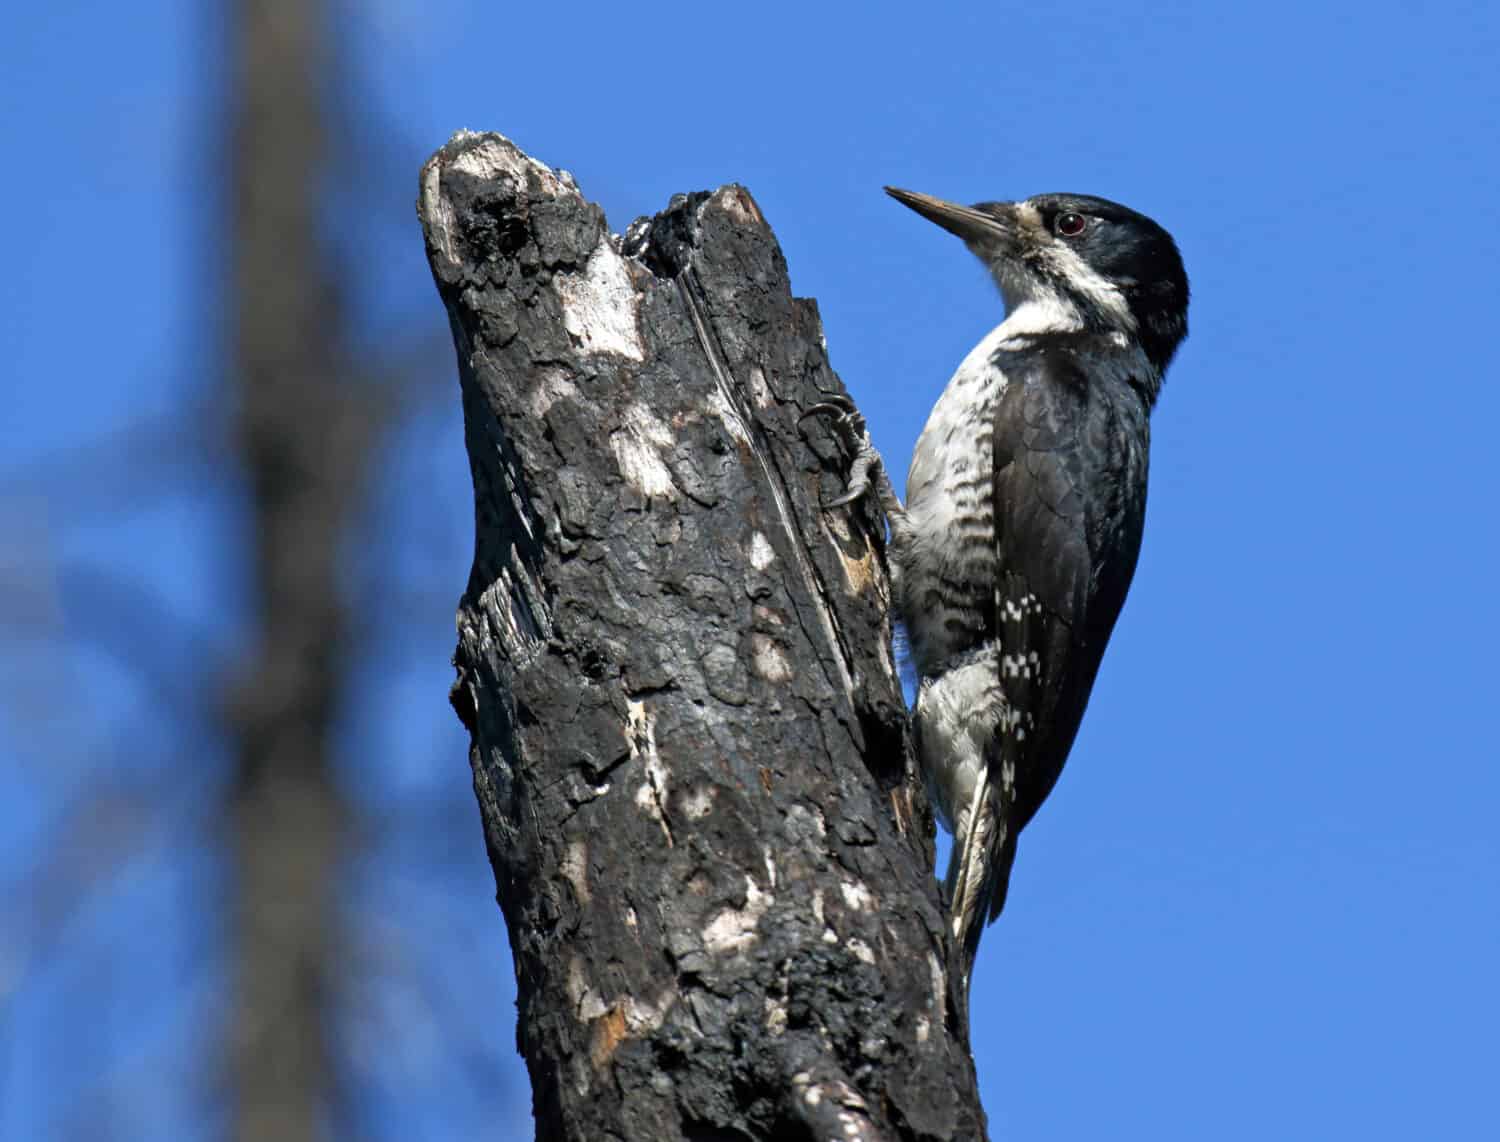 Adult Black-backed Woodpecker (Picoides arcticus) in Alaska, United States.